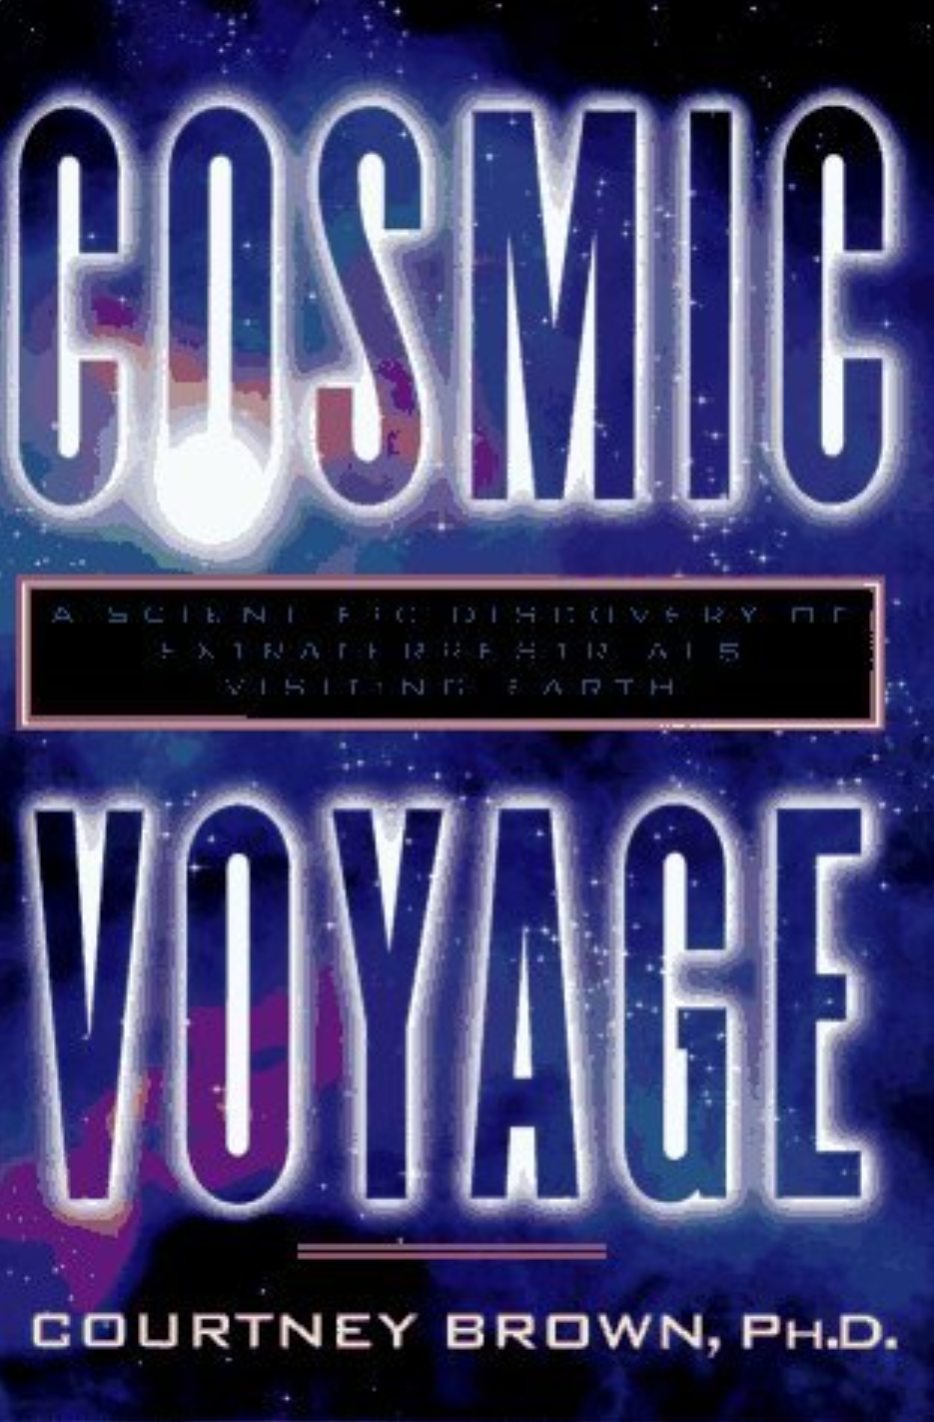 cosmic voyage quizlet